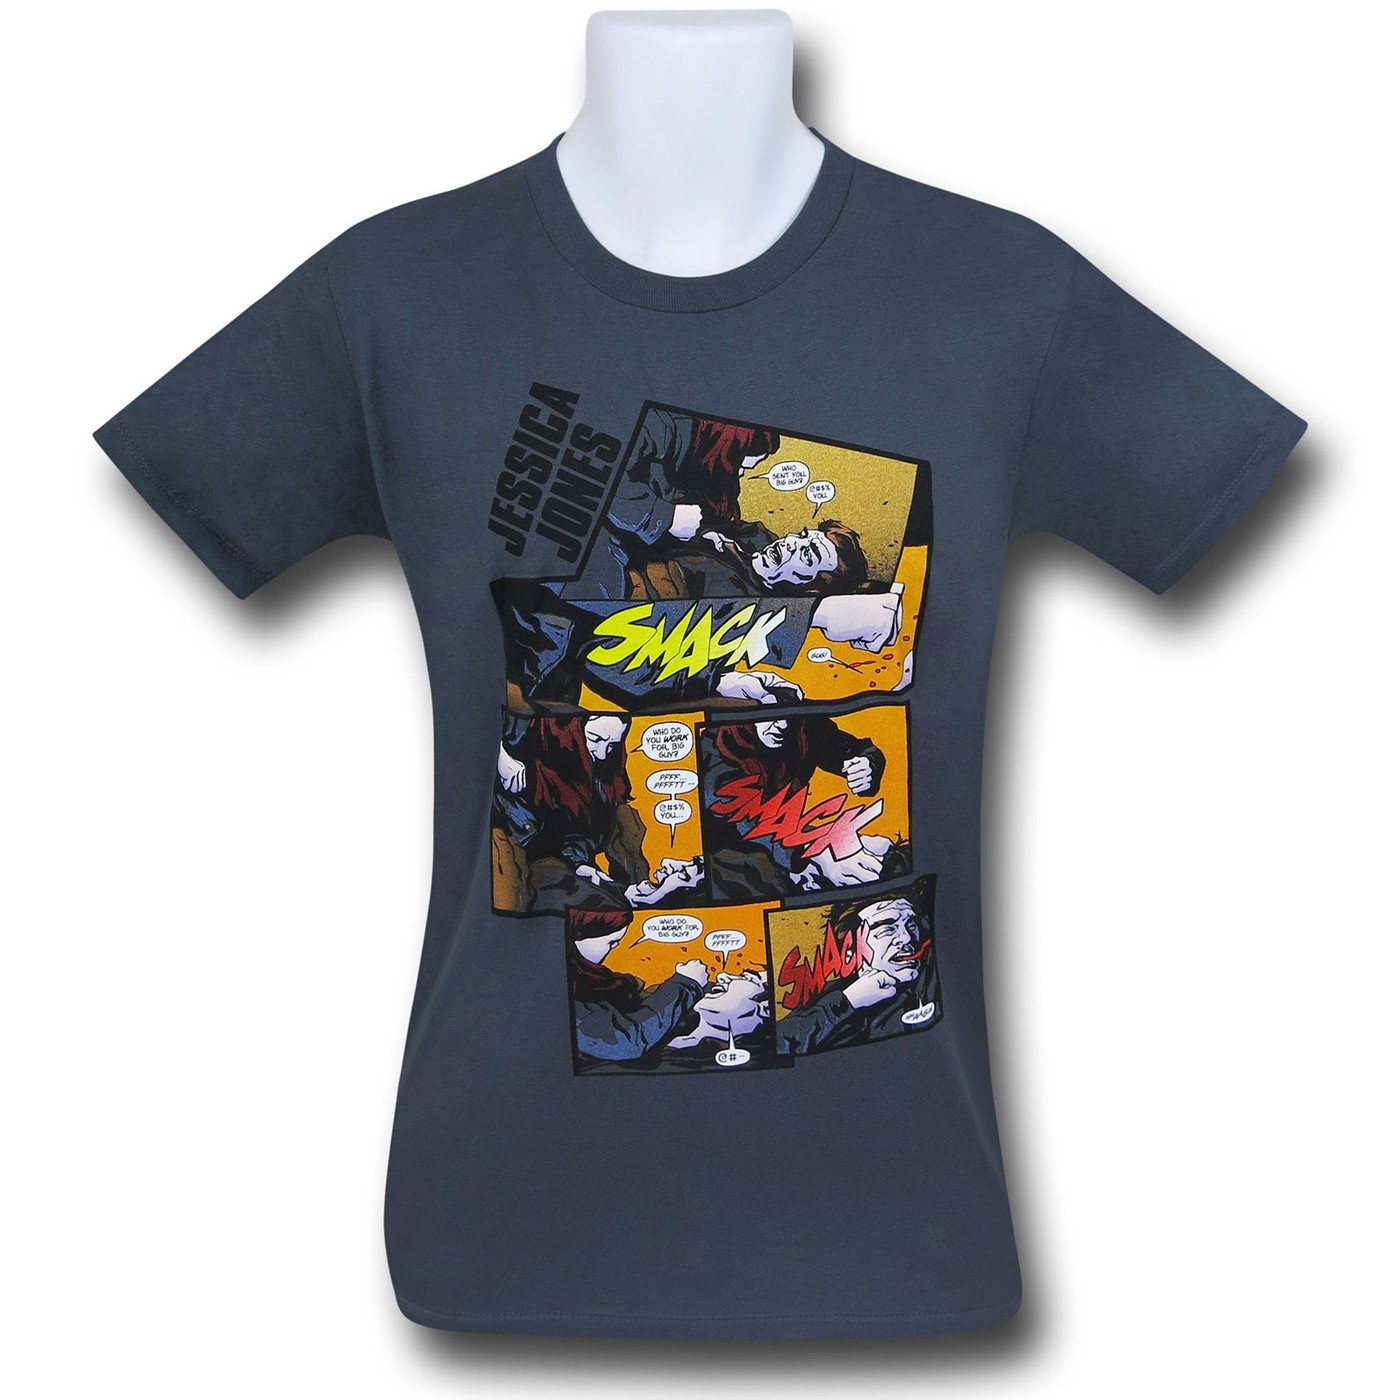 Jessica Jones Smack Attack T-Shirt